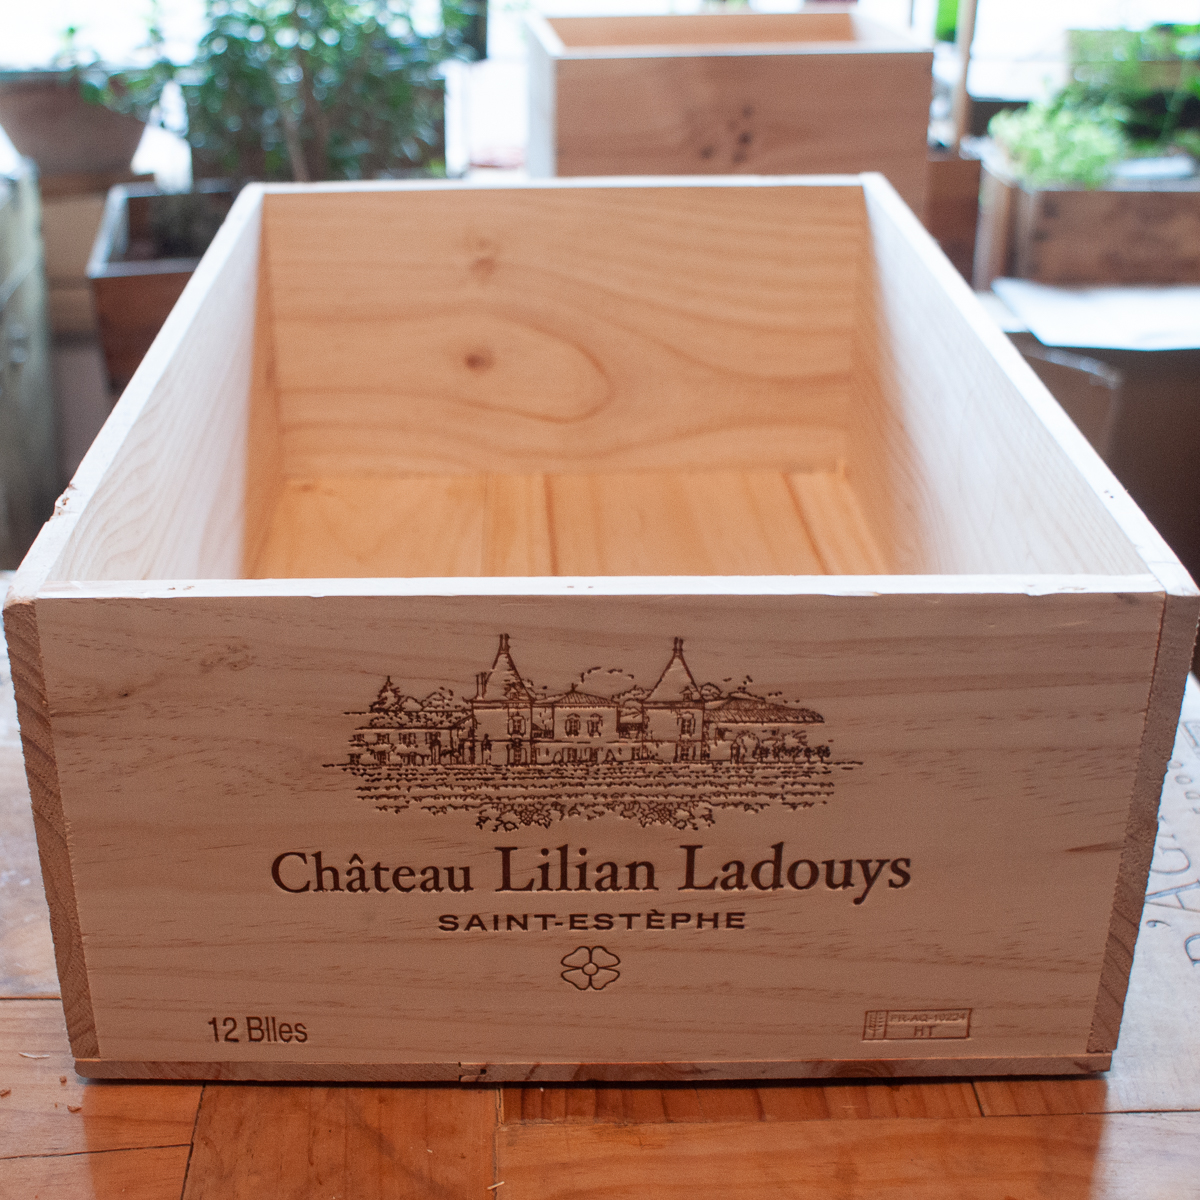 12er Box Chateau Lilian Ladouys